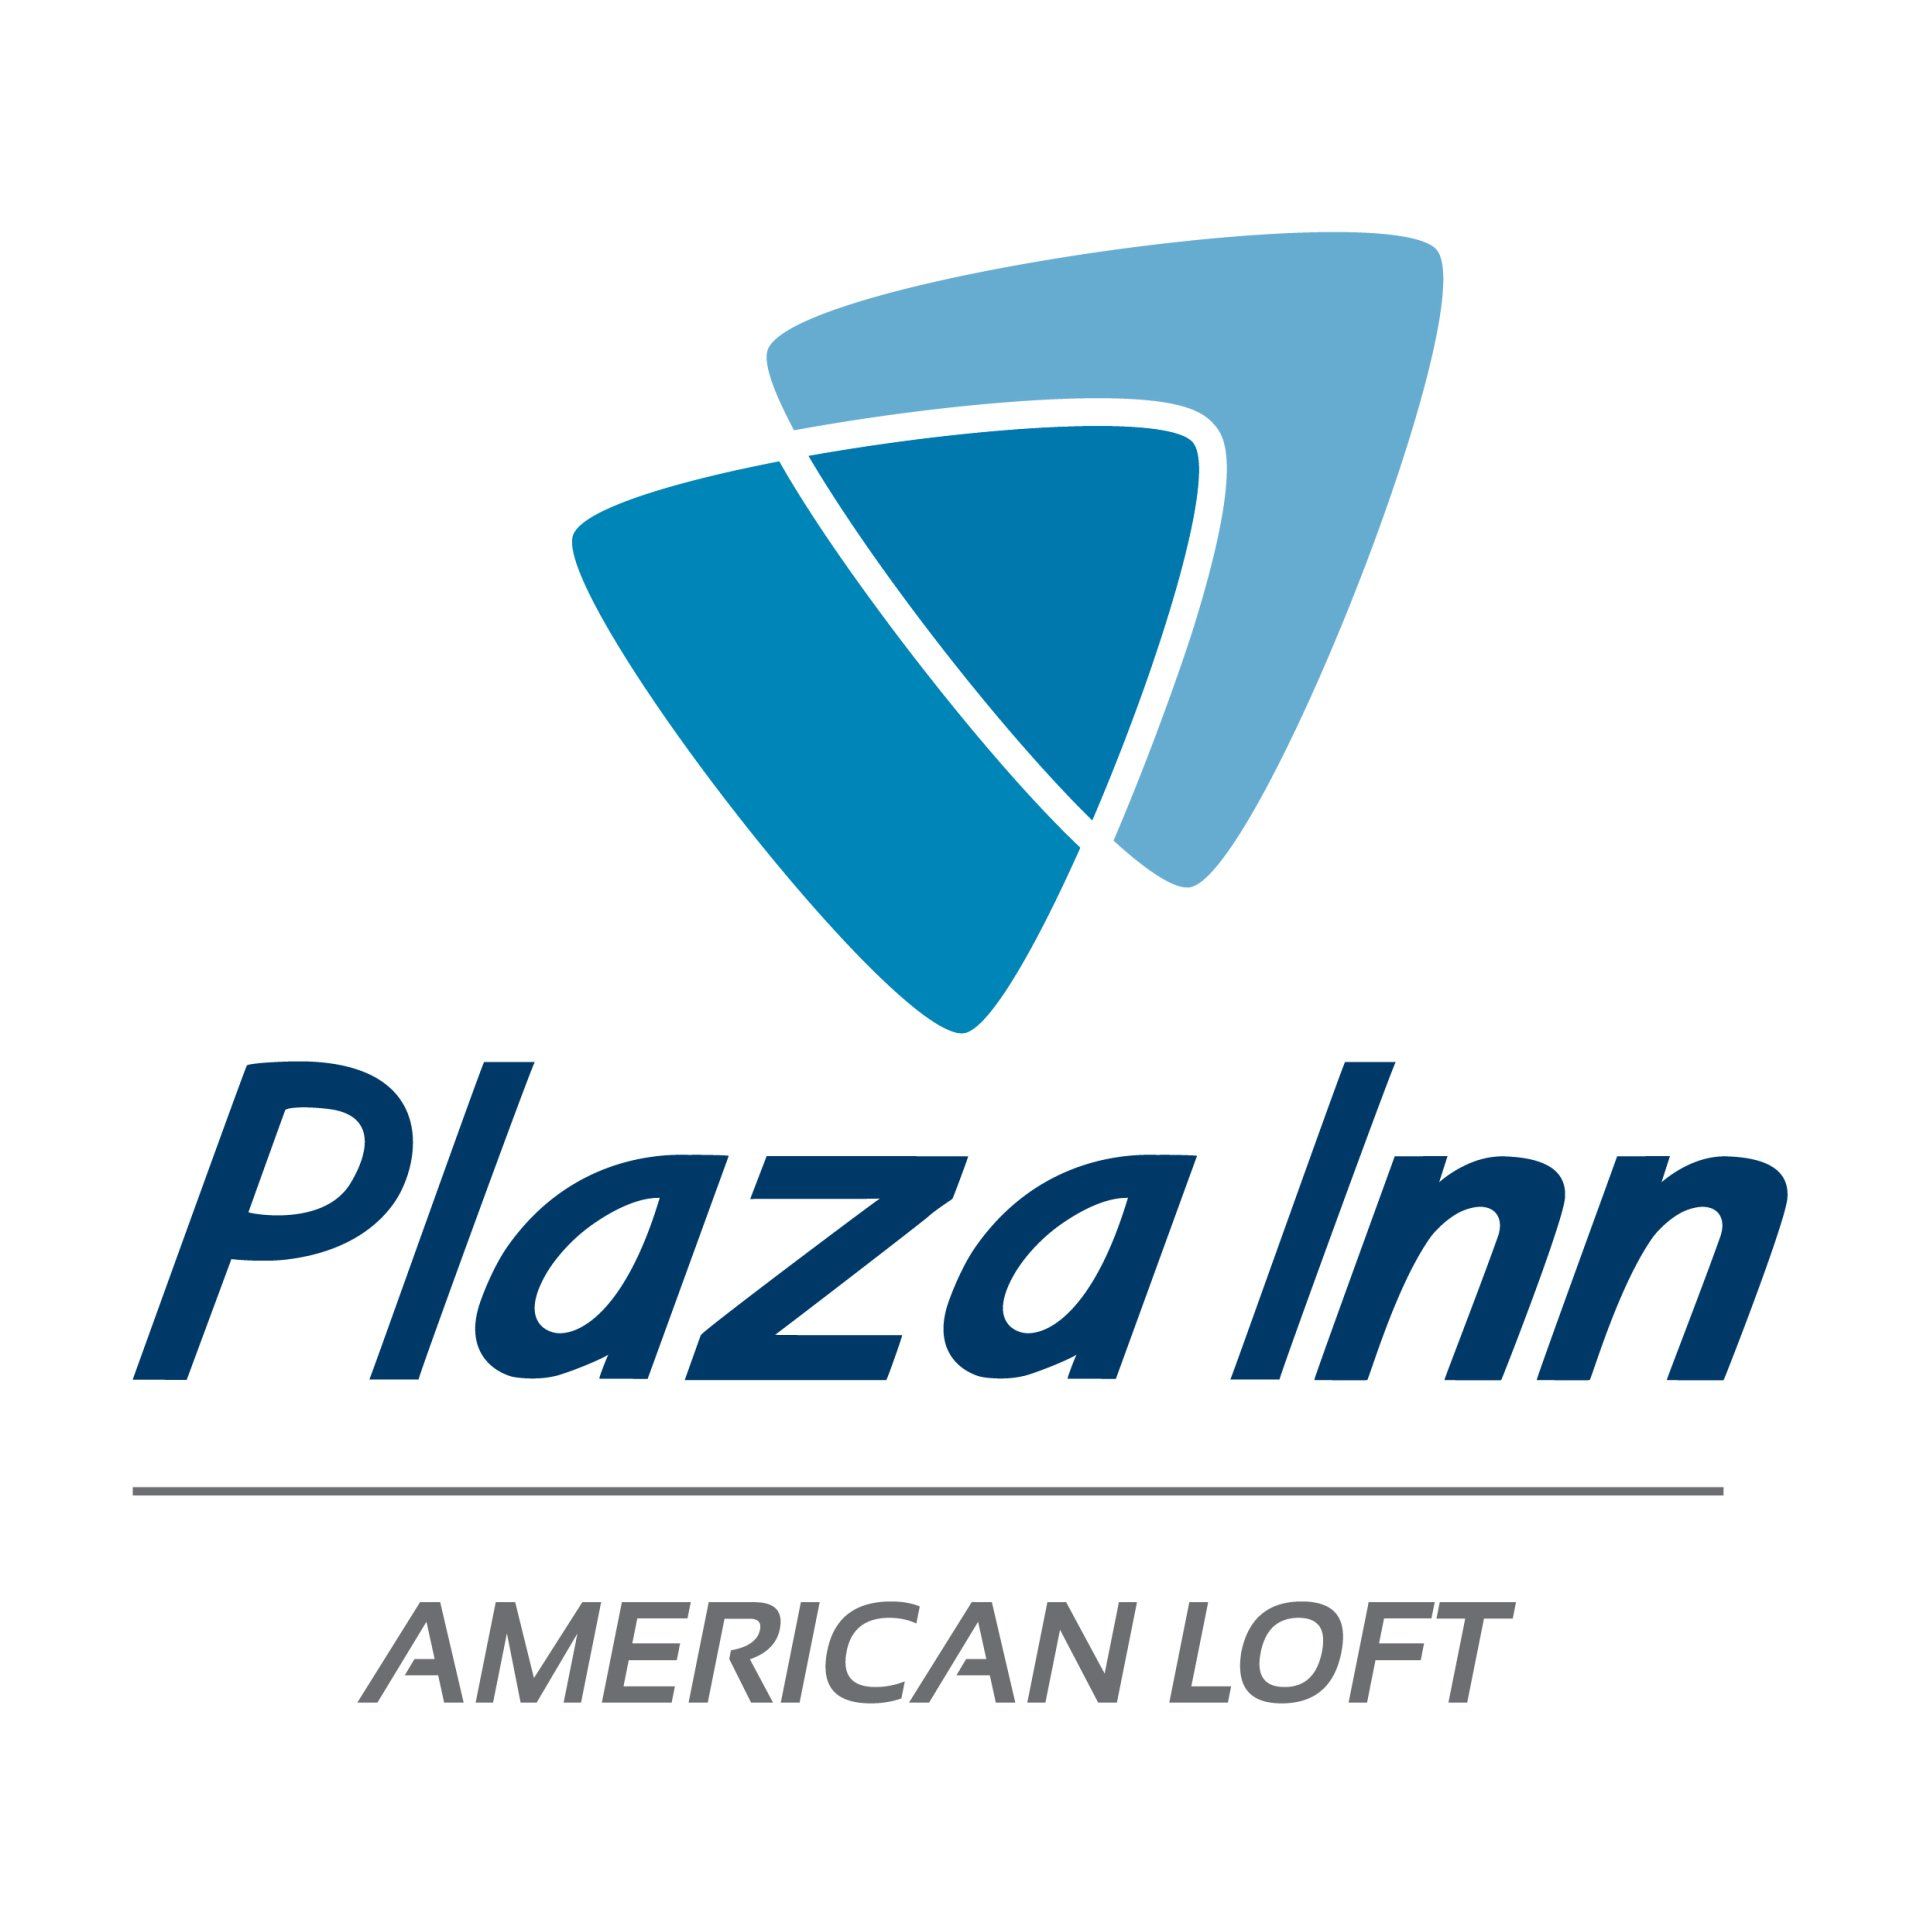 Plaza Inn American Loft